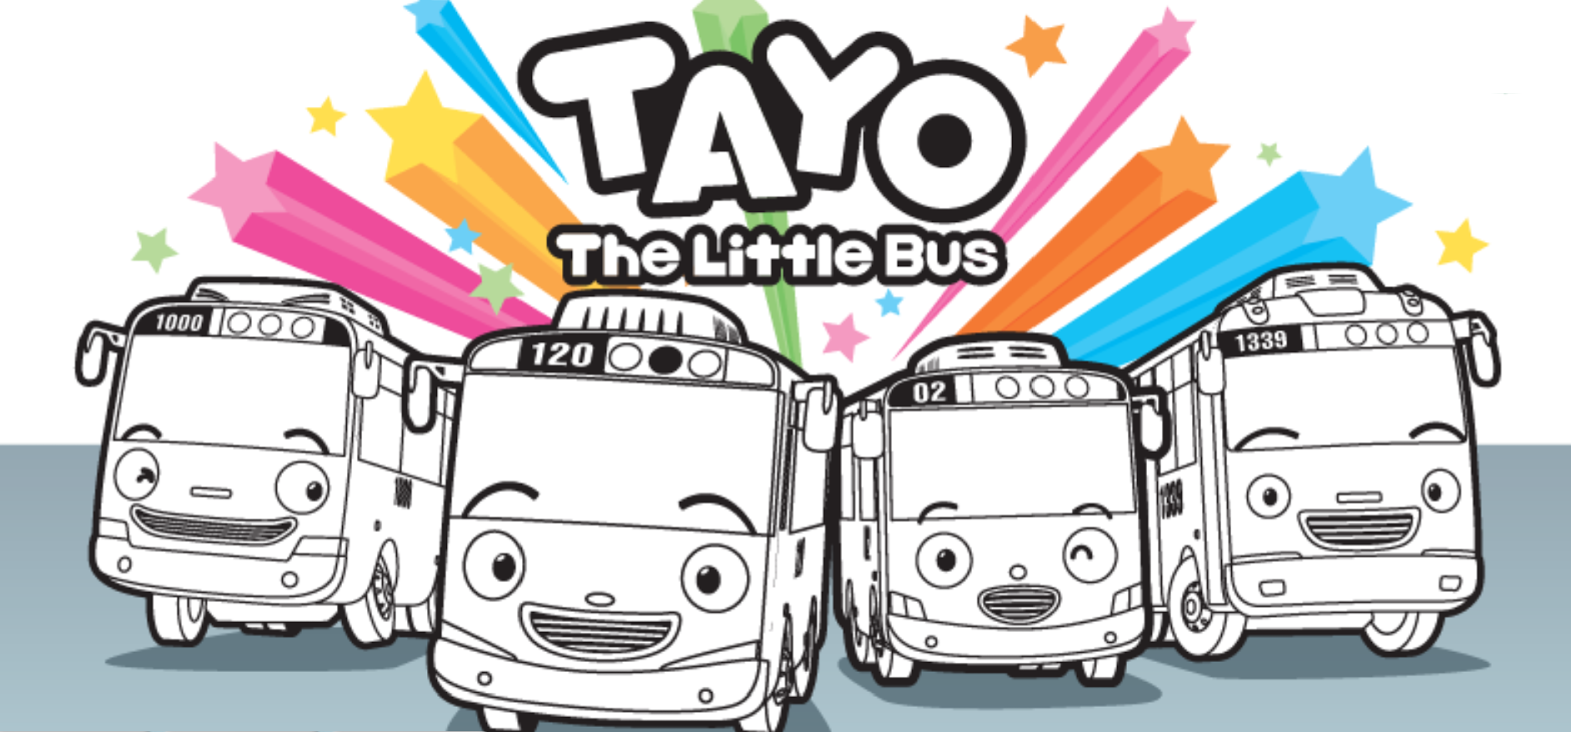 Gambar Mewarnai Tayo The Little Bus Bis Kecil Yang Baik Hati Anak SD